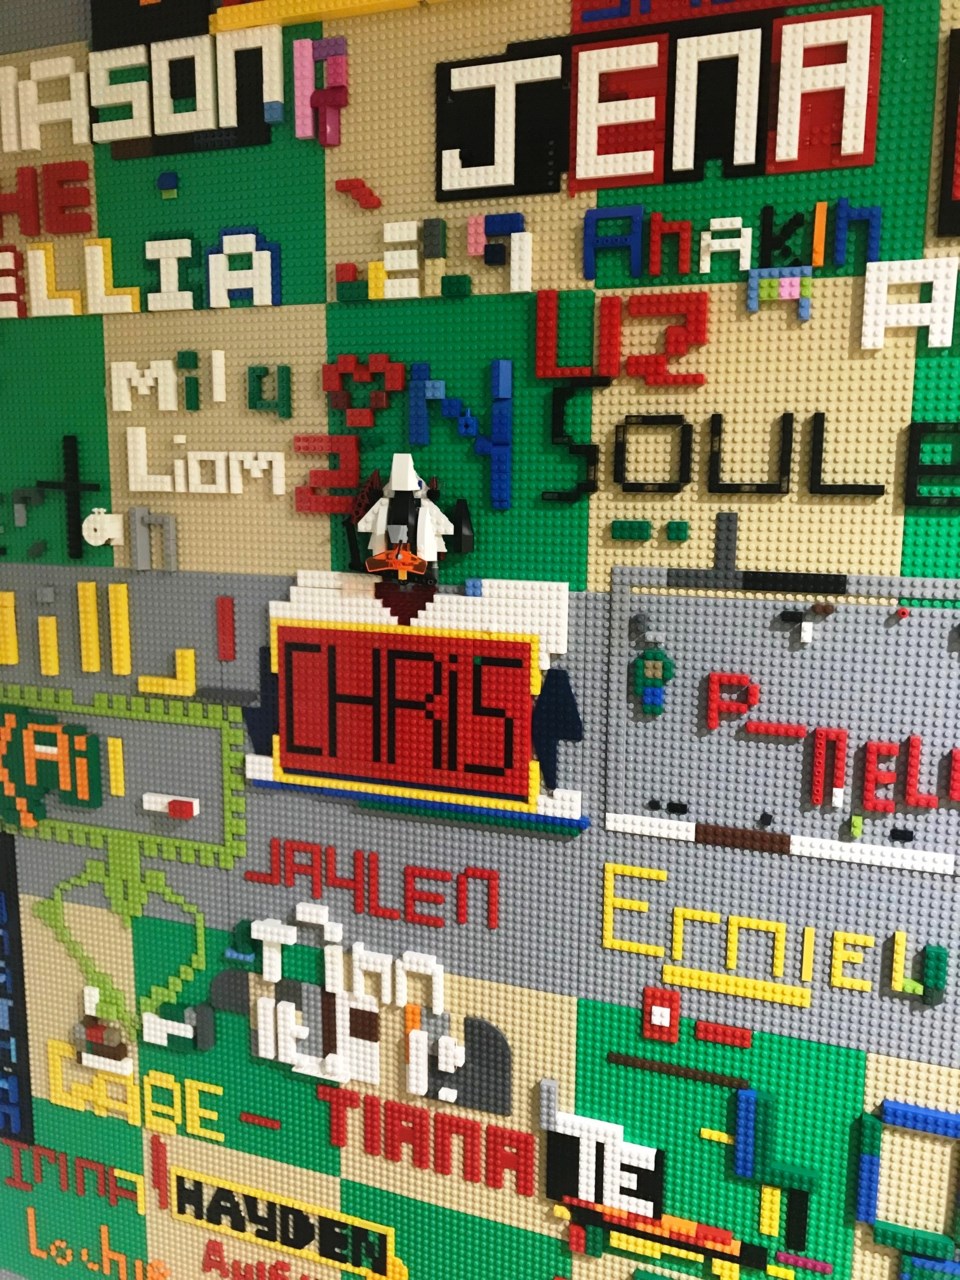 Lego room